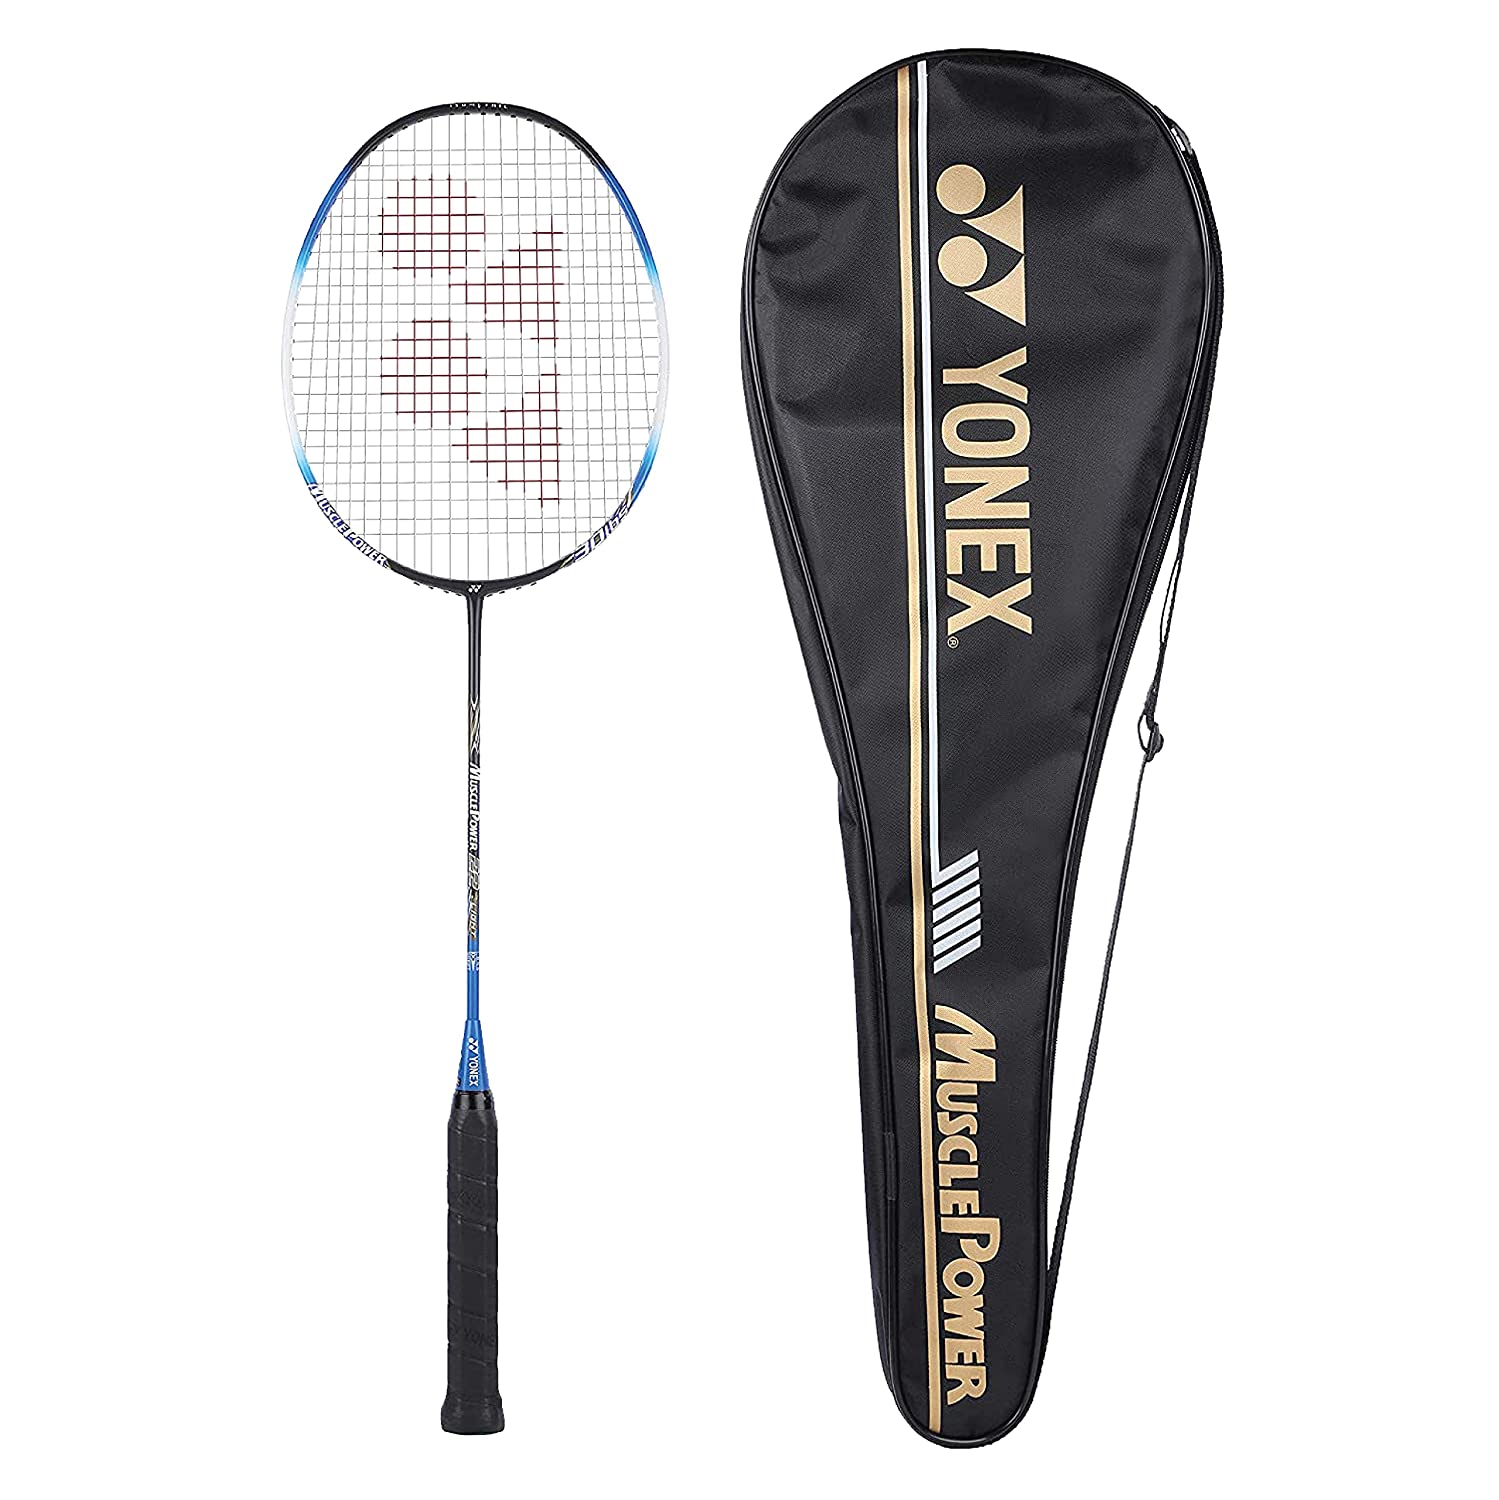 Yonex Muscle Power 22 Light Badminton Racket, Black/Blue - Best Price online Prokicksports.com